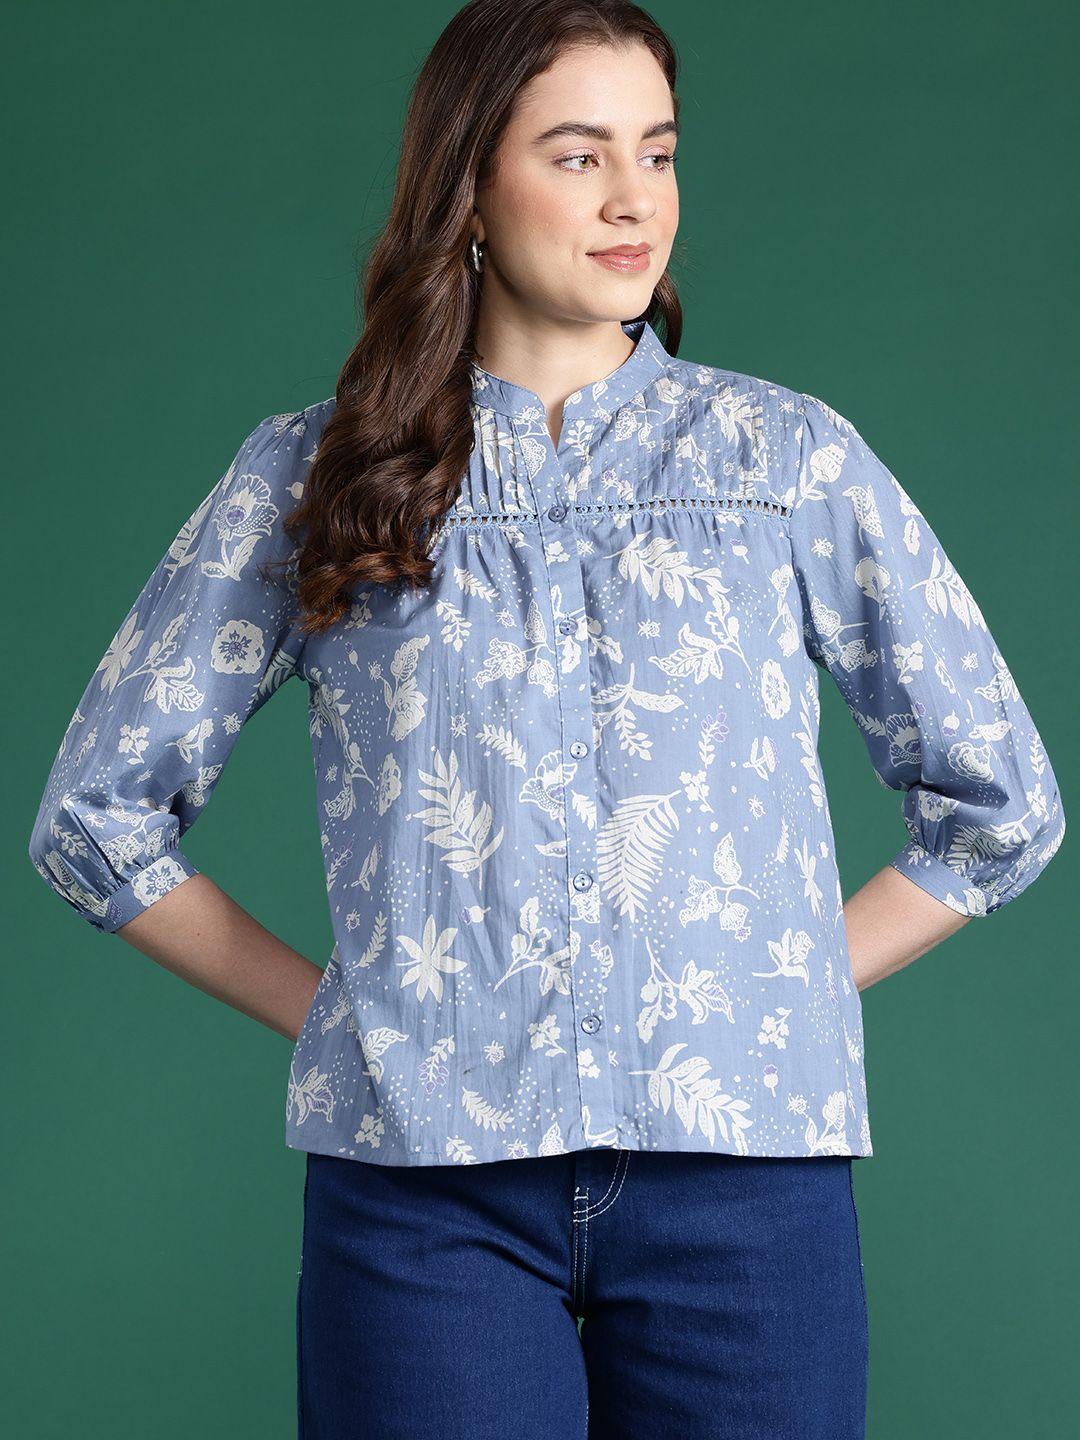 dressberry floral print mandarin collar cotton shirt style top